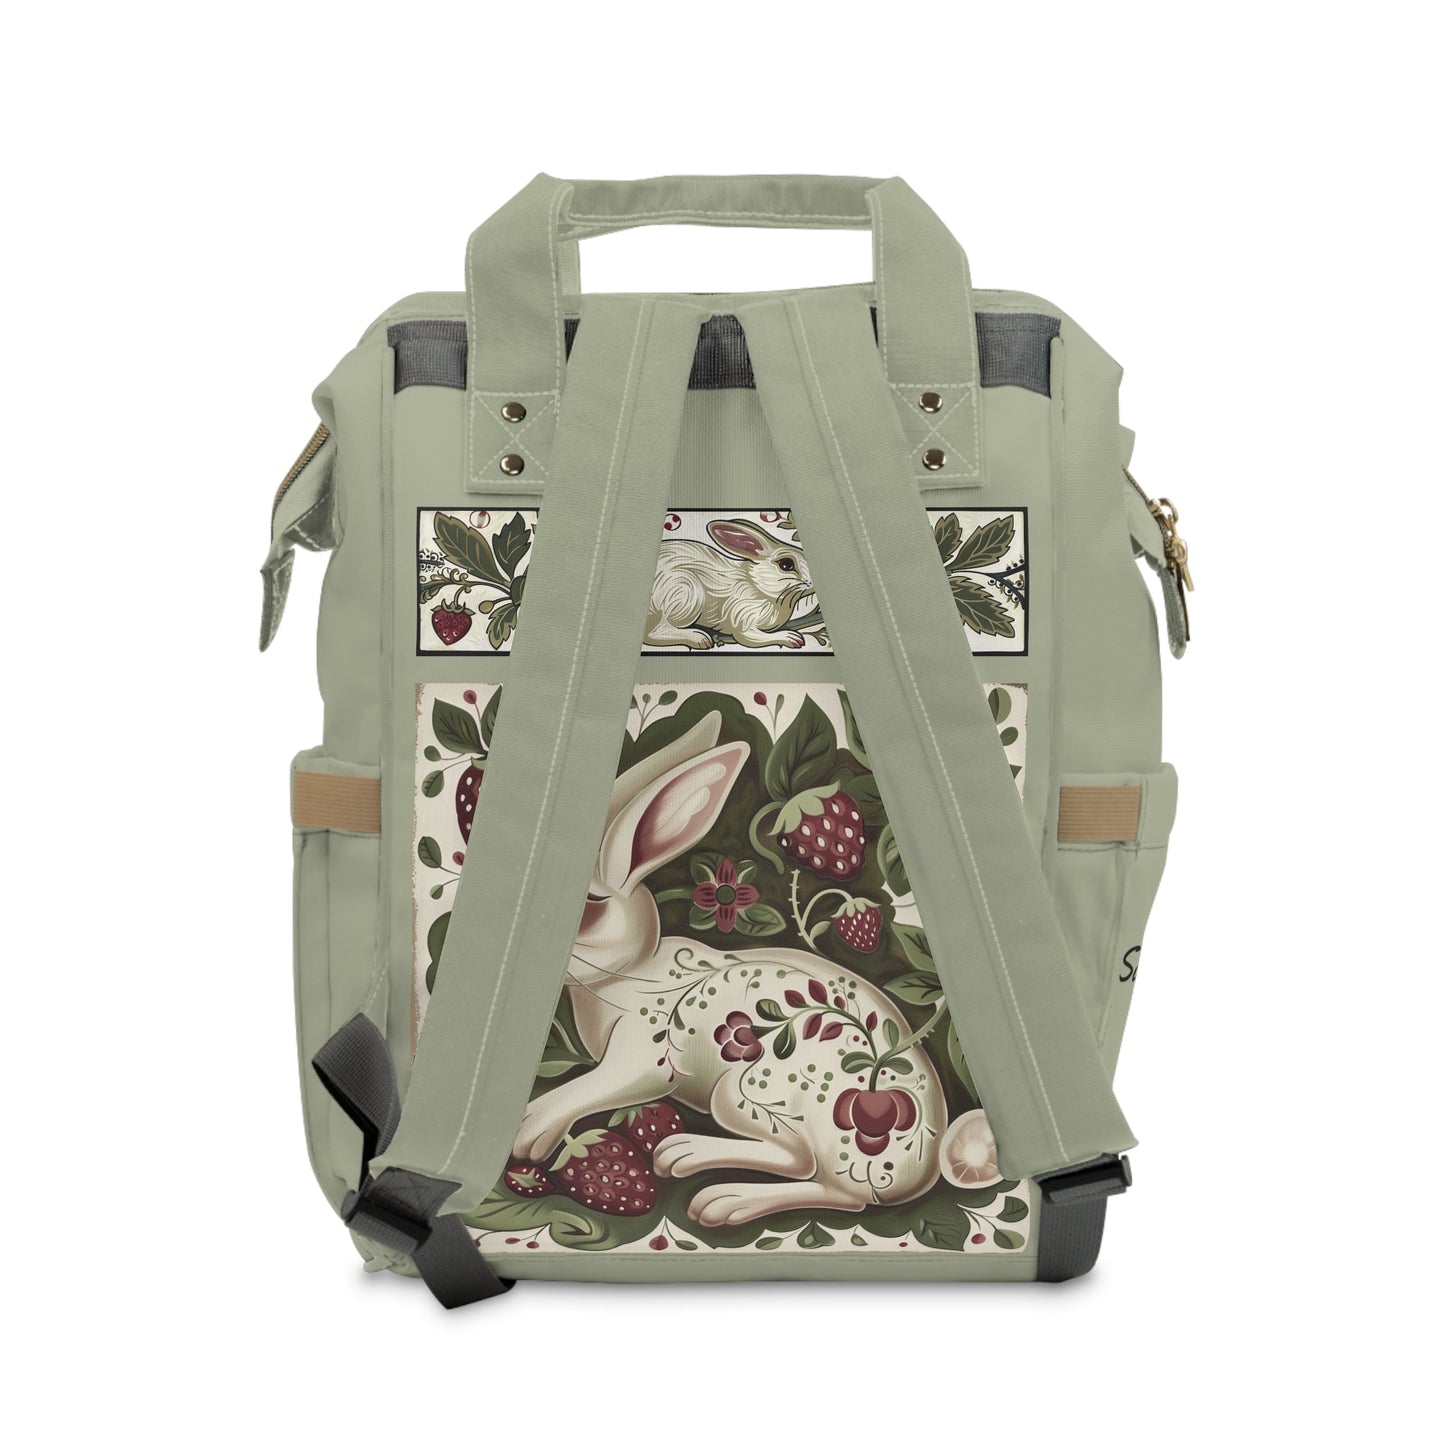 Rabbits and Berries Diaper Bag, Original Print Design Diaper Backpack, Ivory, Sage Green, Rose Colors, Personalized Baby Shower Gift - FlooredByArt